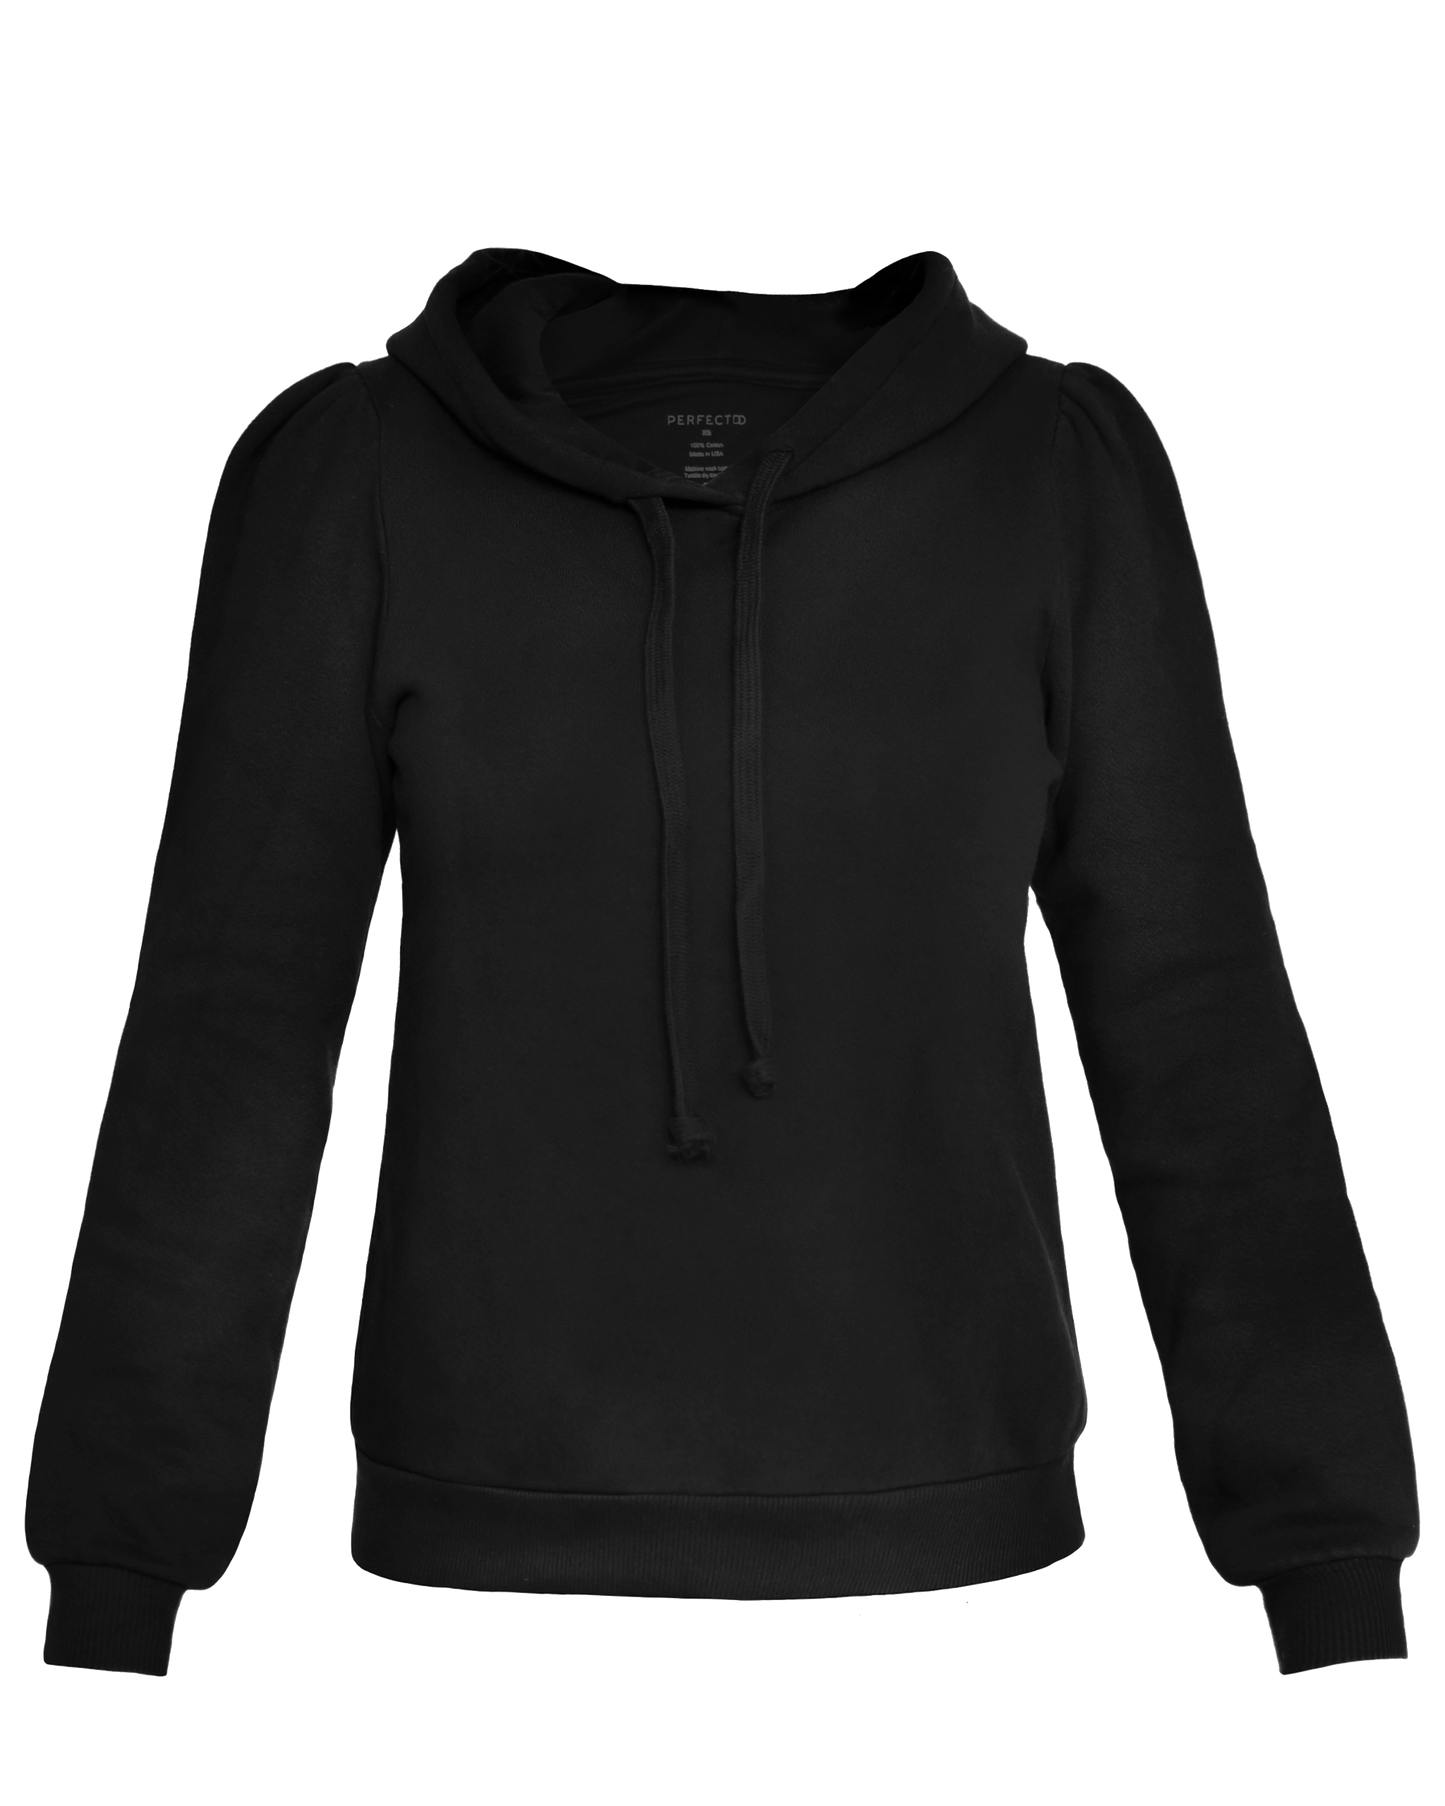 Flat lay of black cotton fleece long sleeve sweatshirt